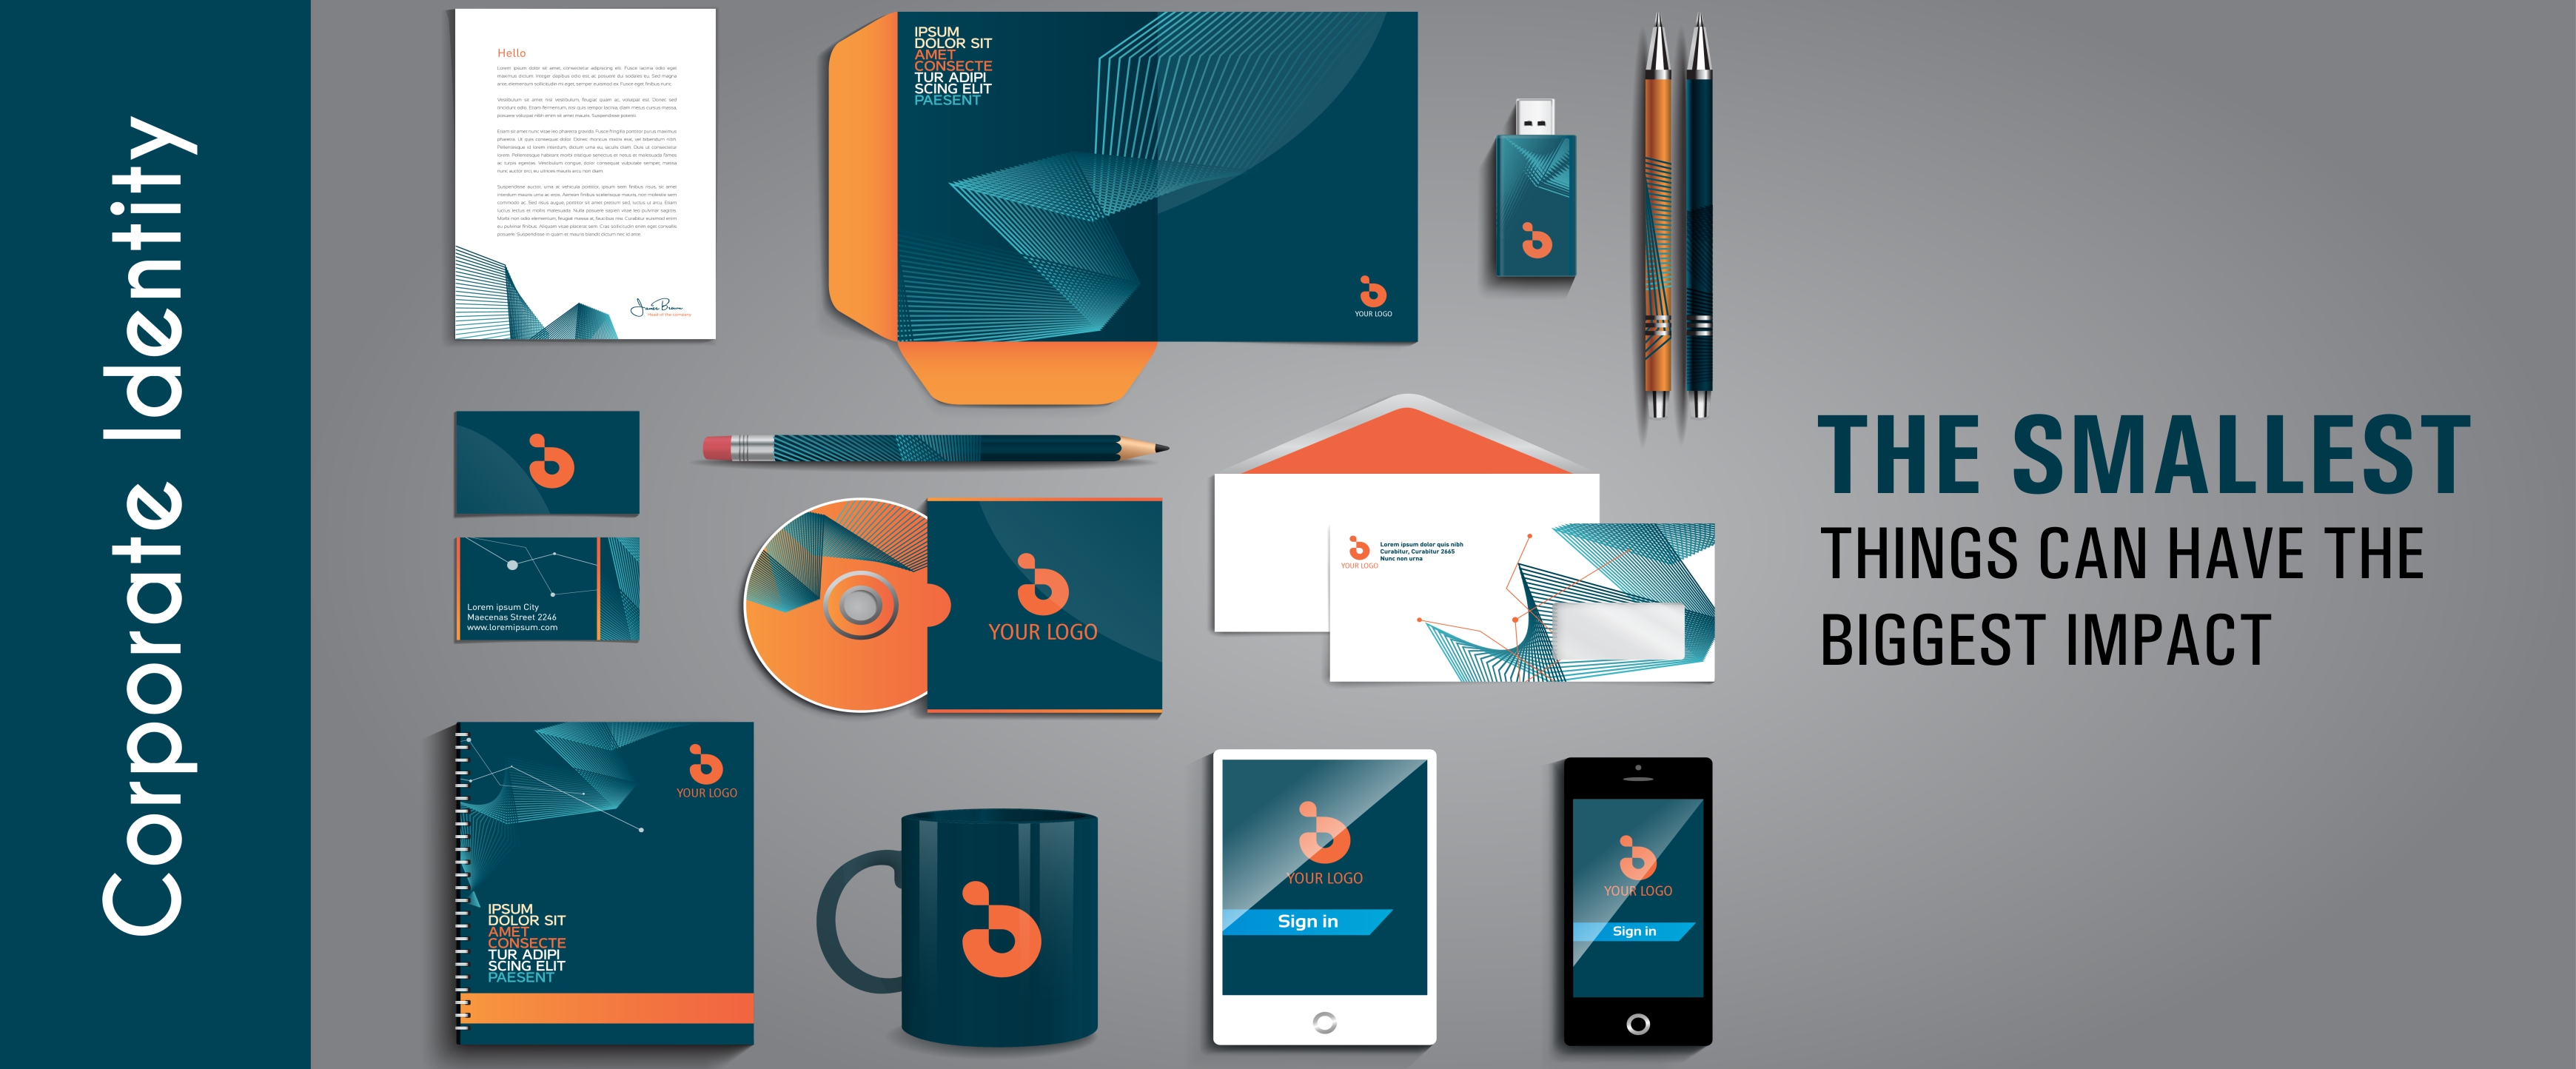 SLIDER 4 2 - Corporate Identity Design Service by Creative Studio